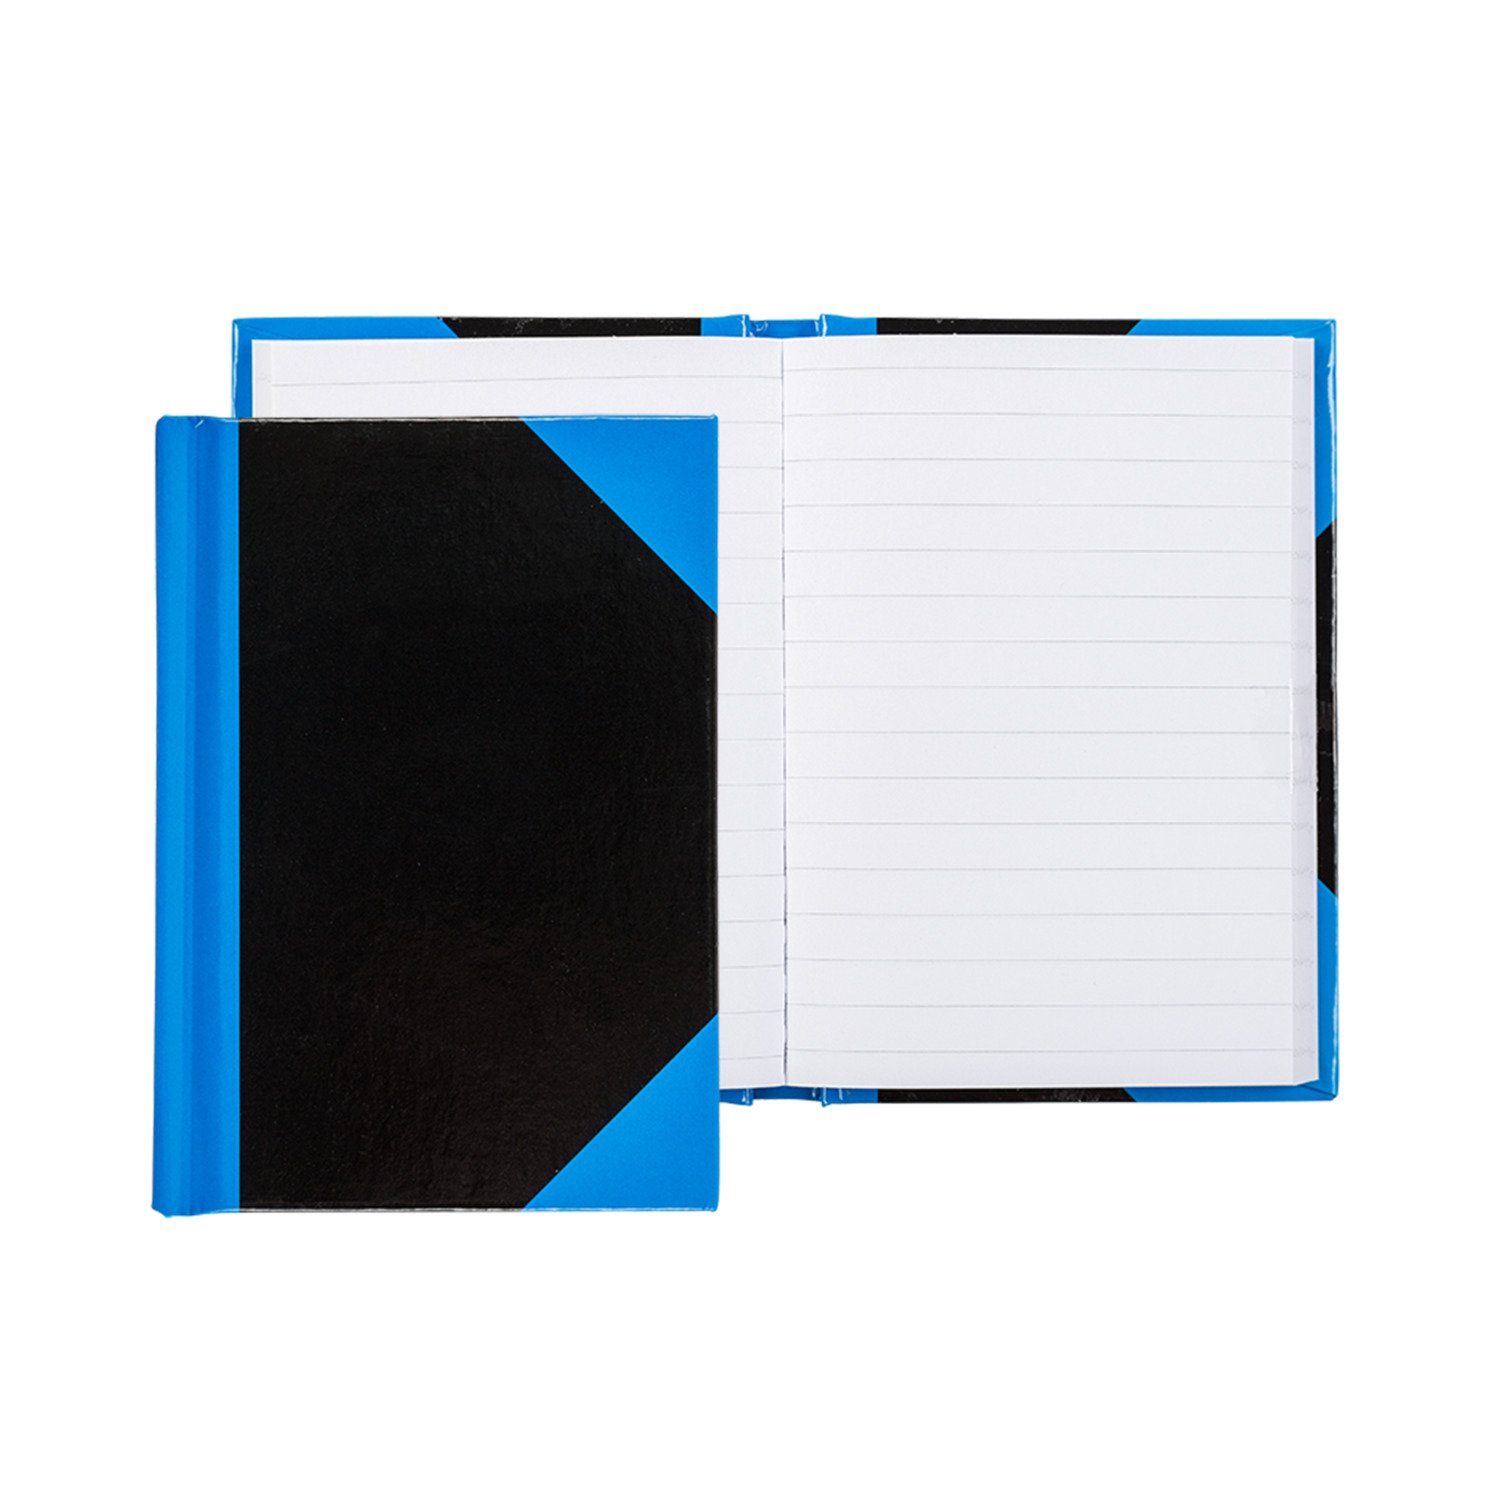 Idena Notizbuch Idena 10351 - Kladde DIN A7, 96 Blatt,70 g/m², liniert, fester Einban